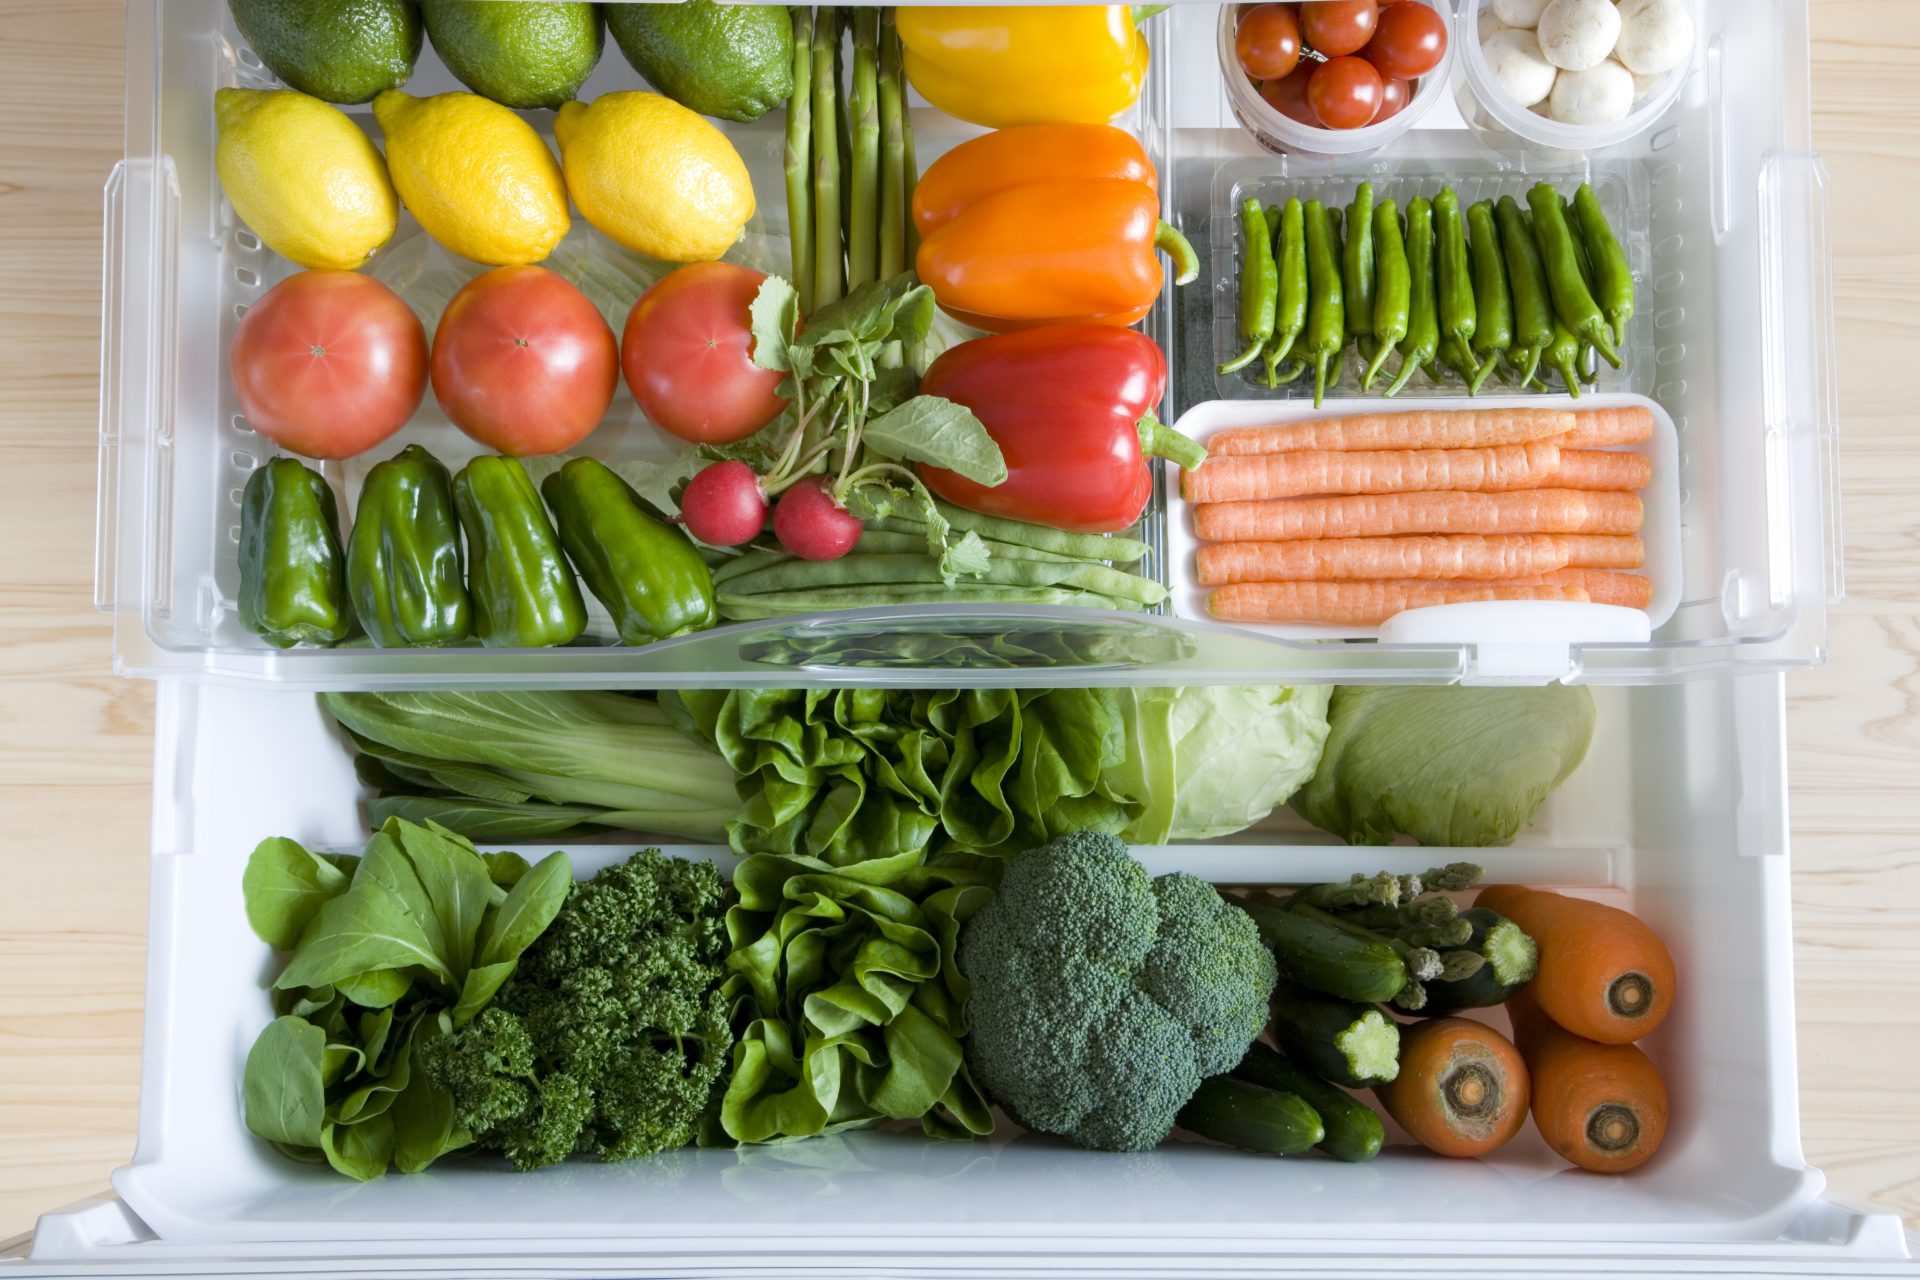 To preserve veggies longer, consider temperature, ethylene, and airflow